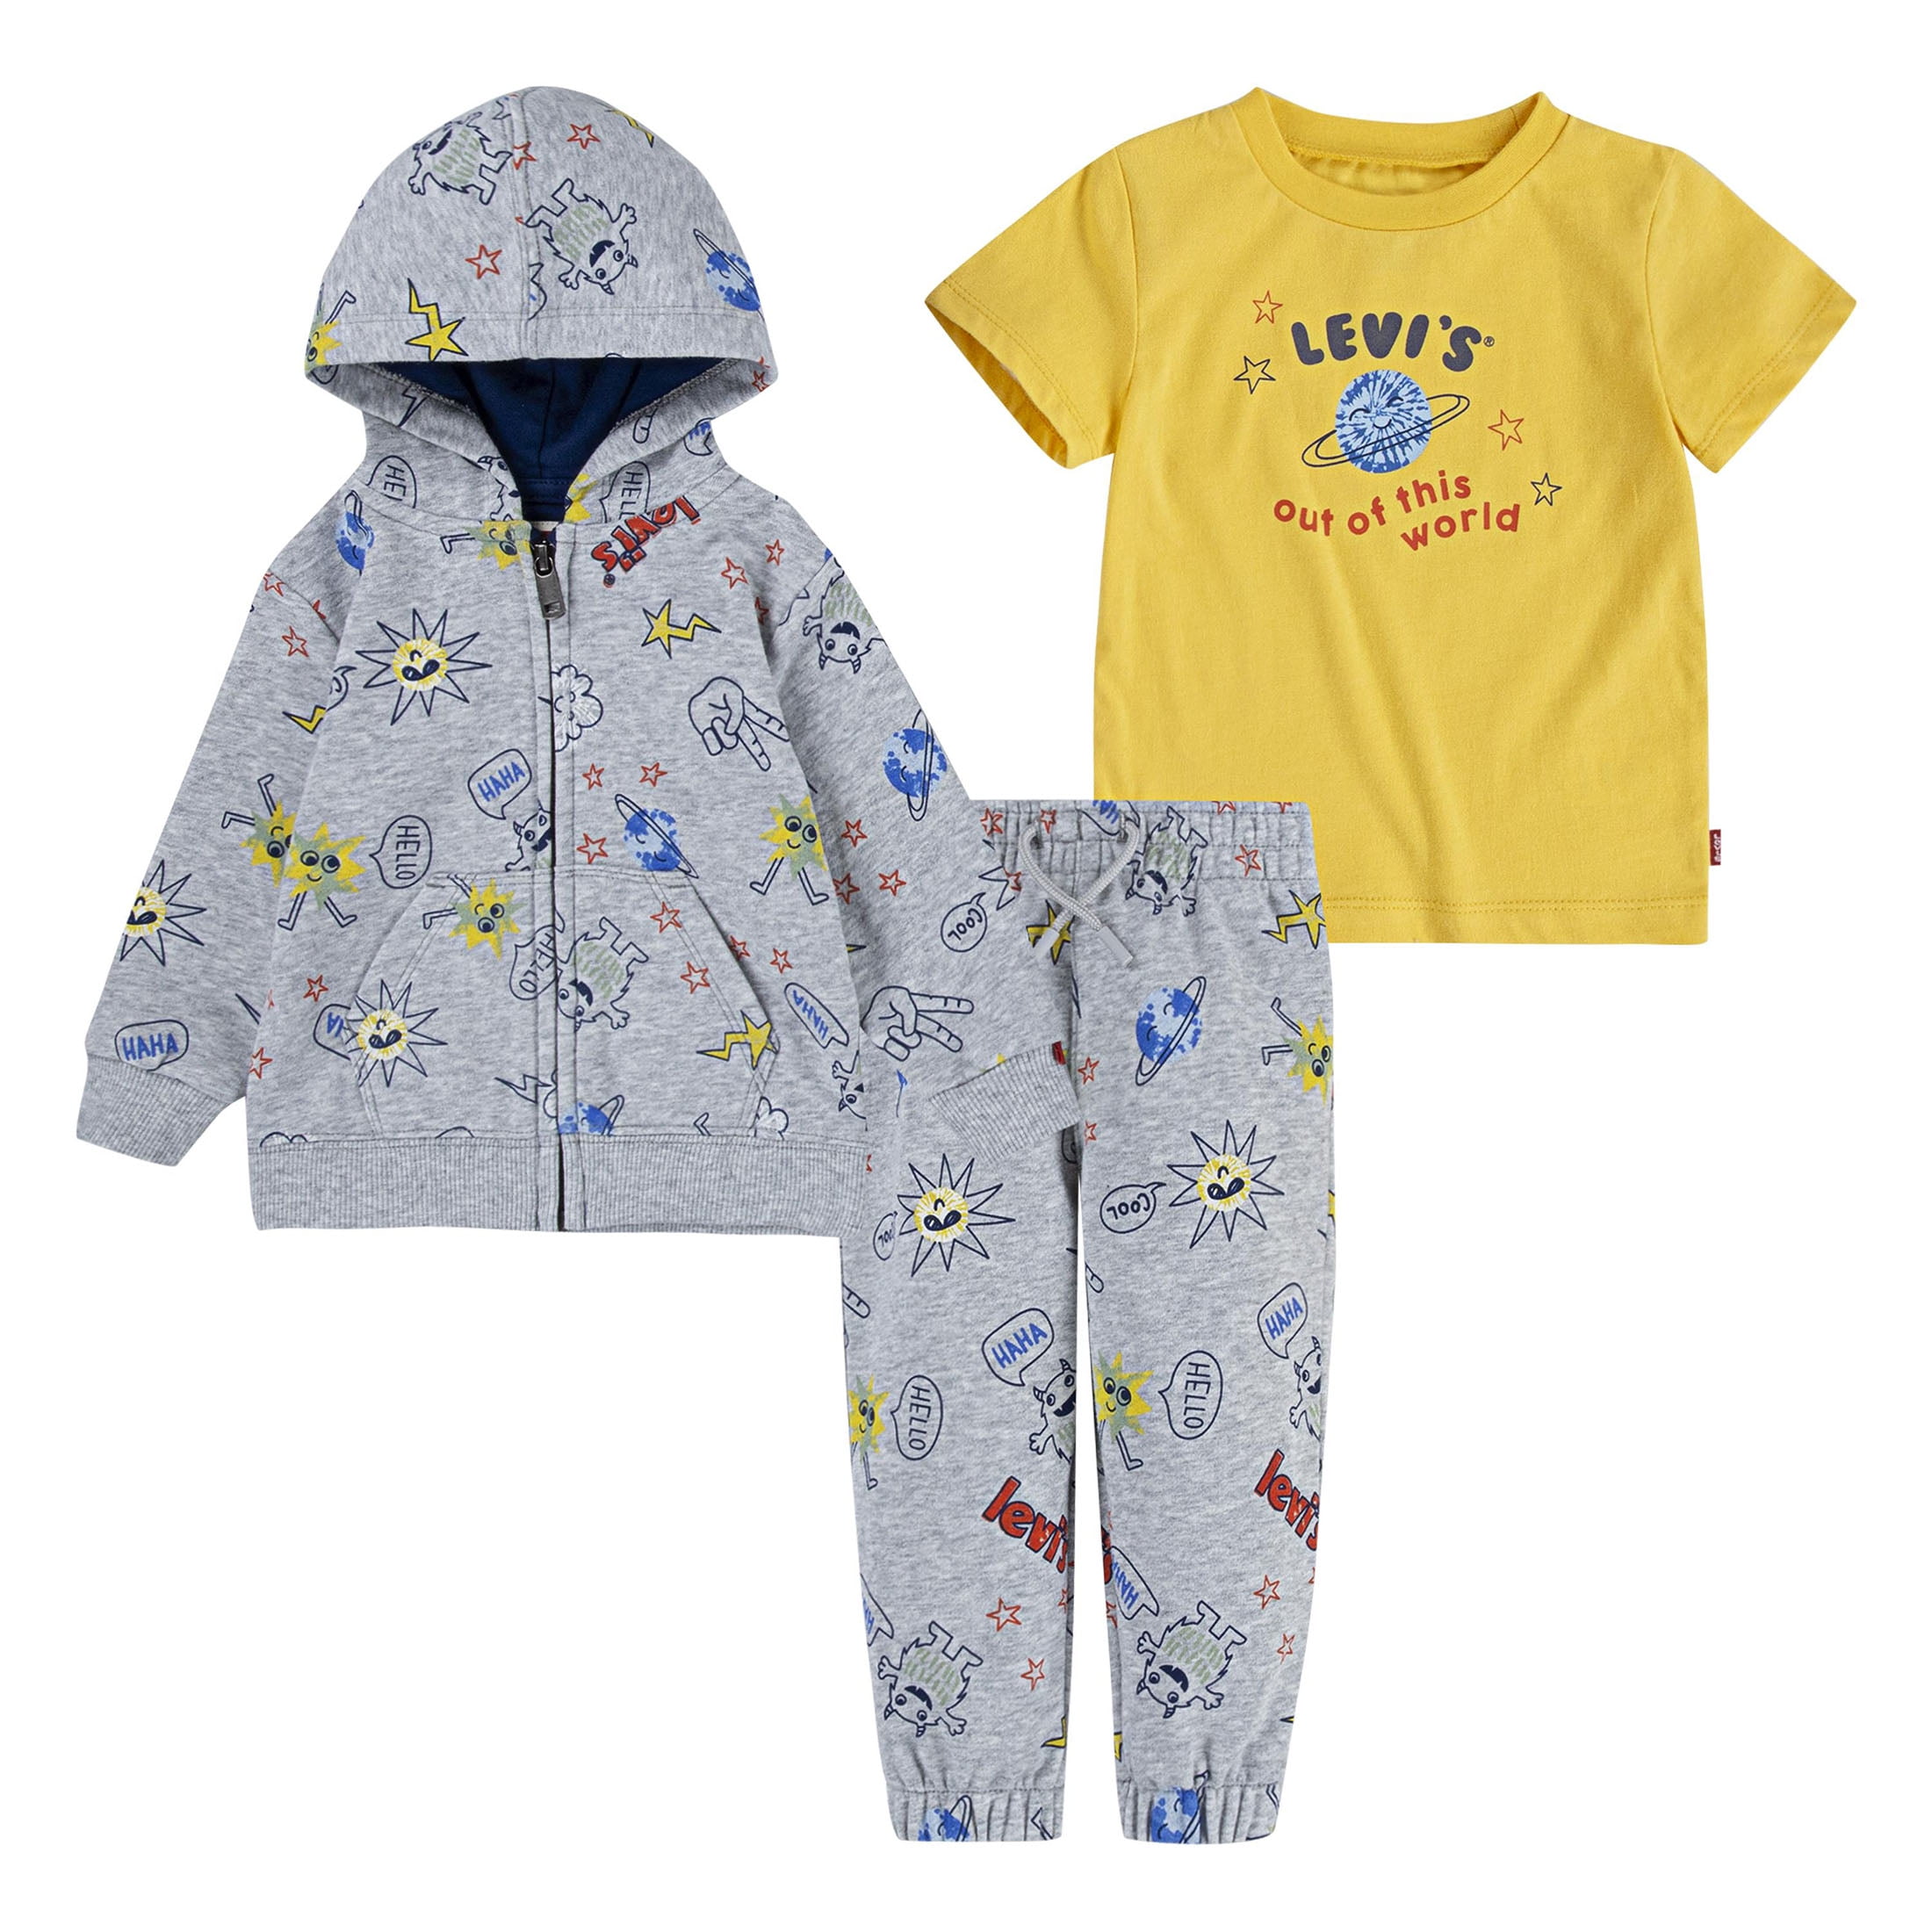 Levi's Baby Boys' Graphic T-Shirt, Joggers 3-Piece Oufit Set, Sizes 3 Months - 24 Months